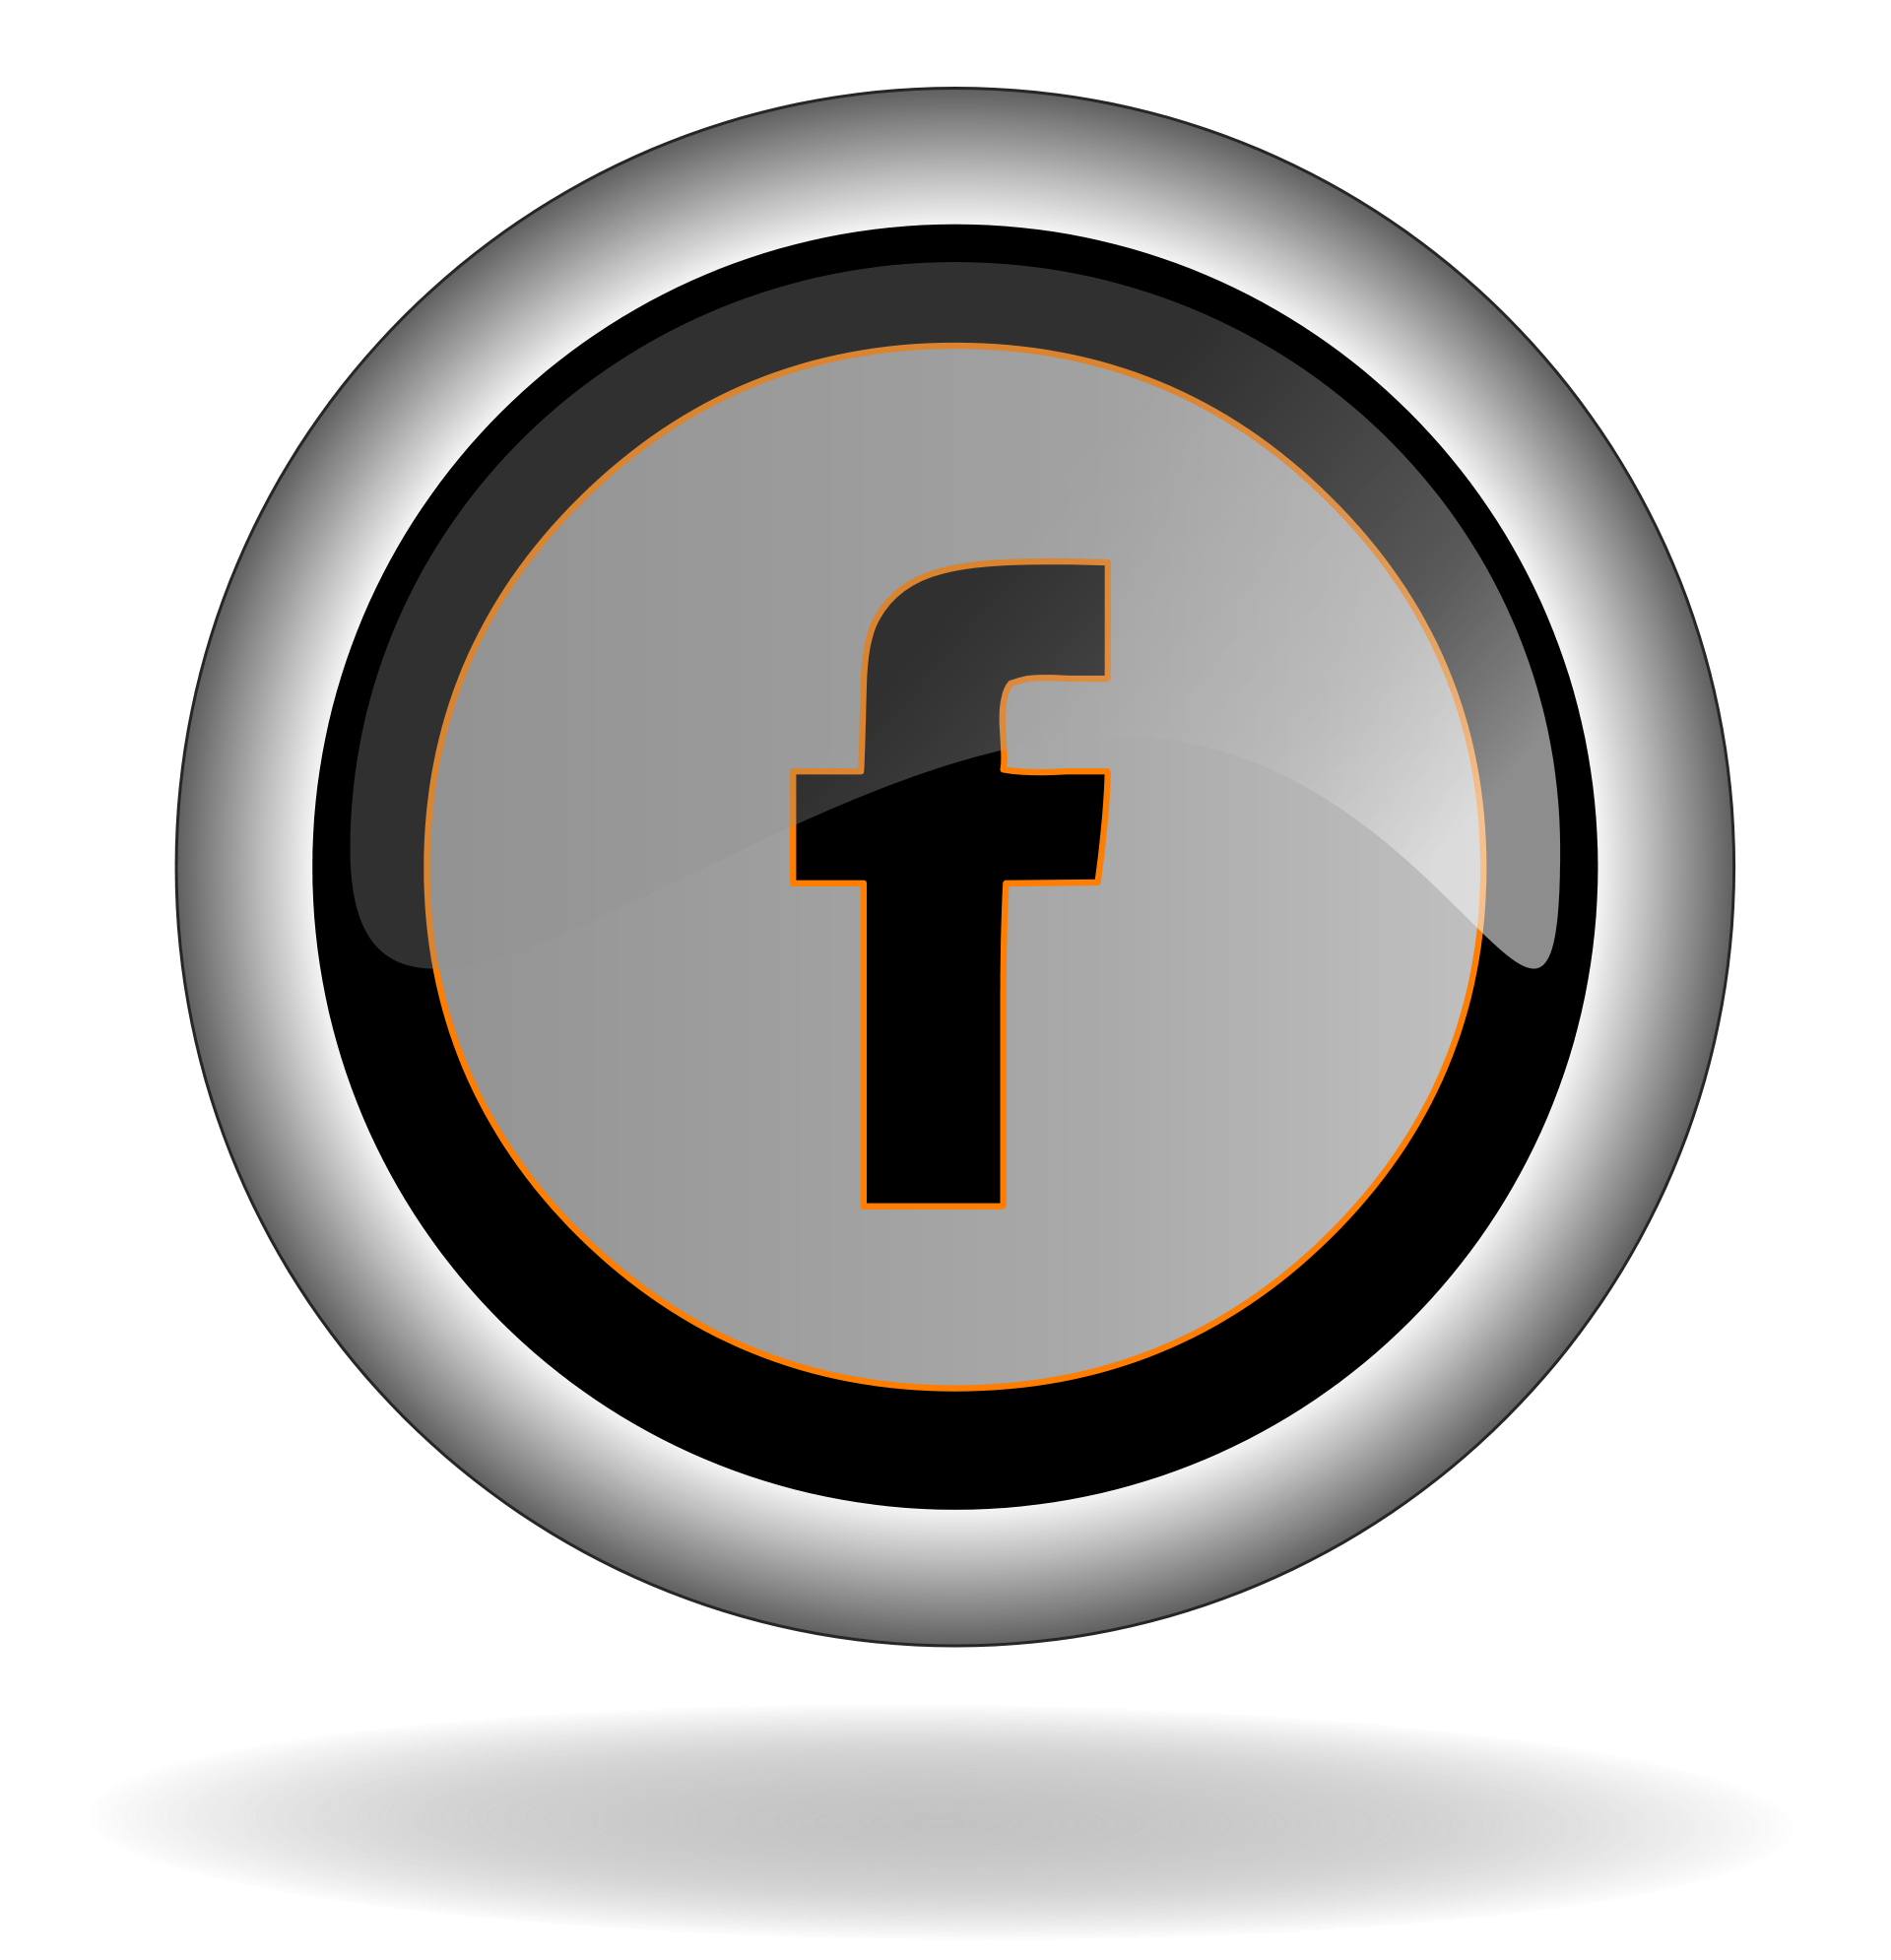 Icona di logo di Facebook